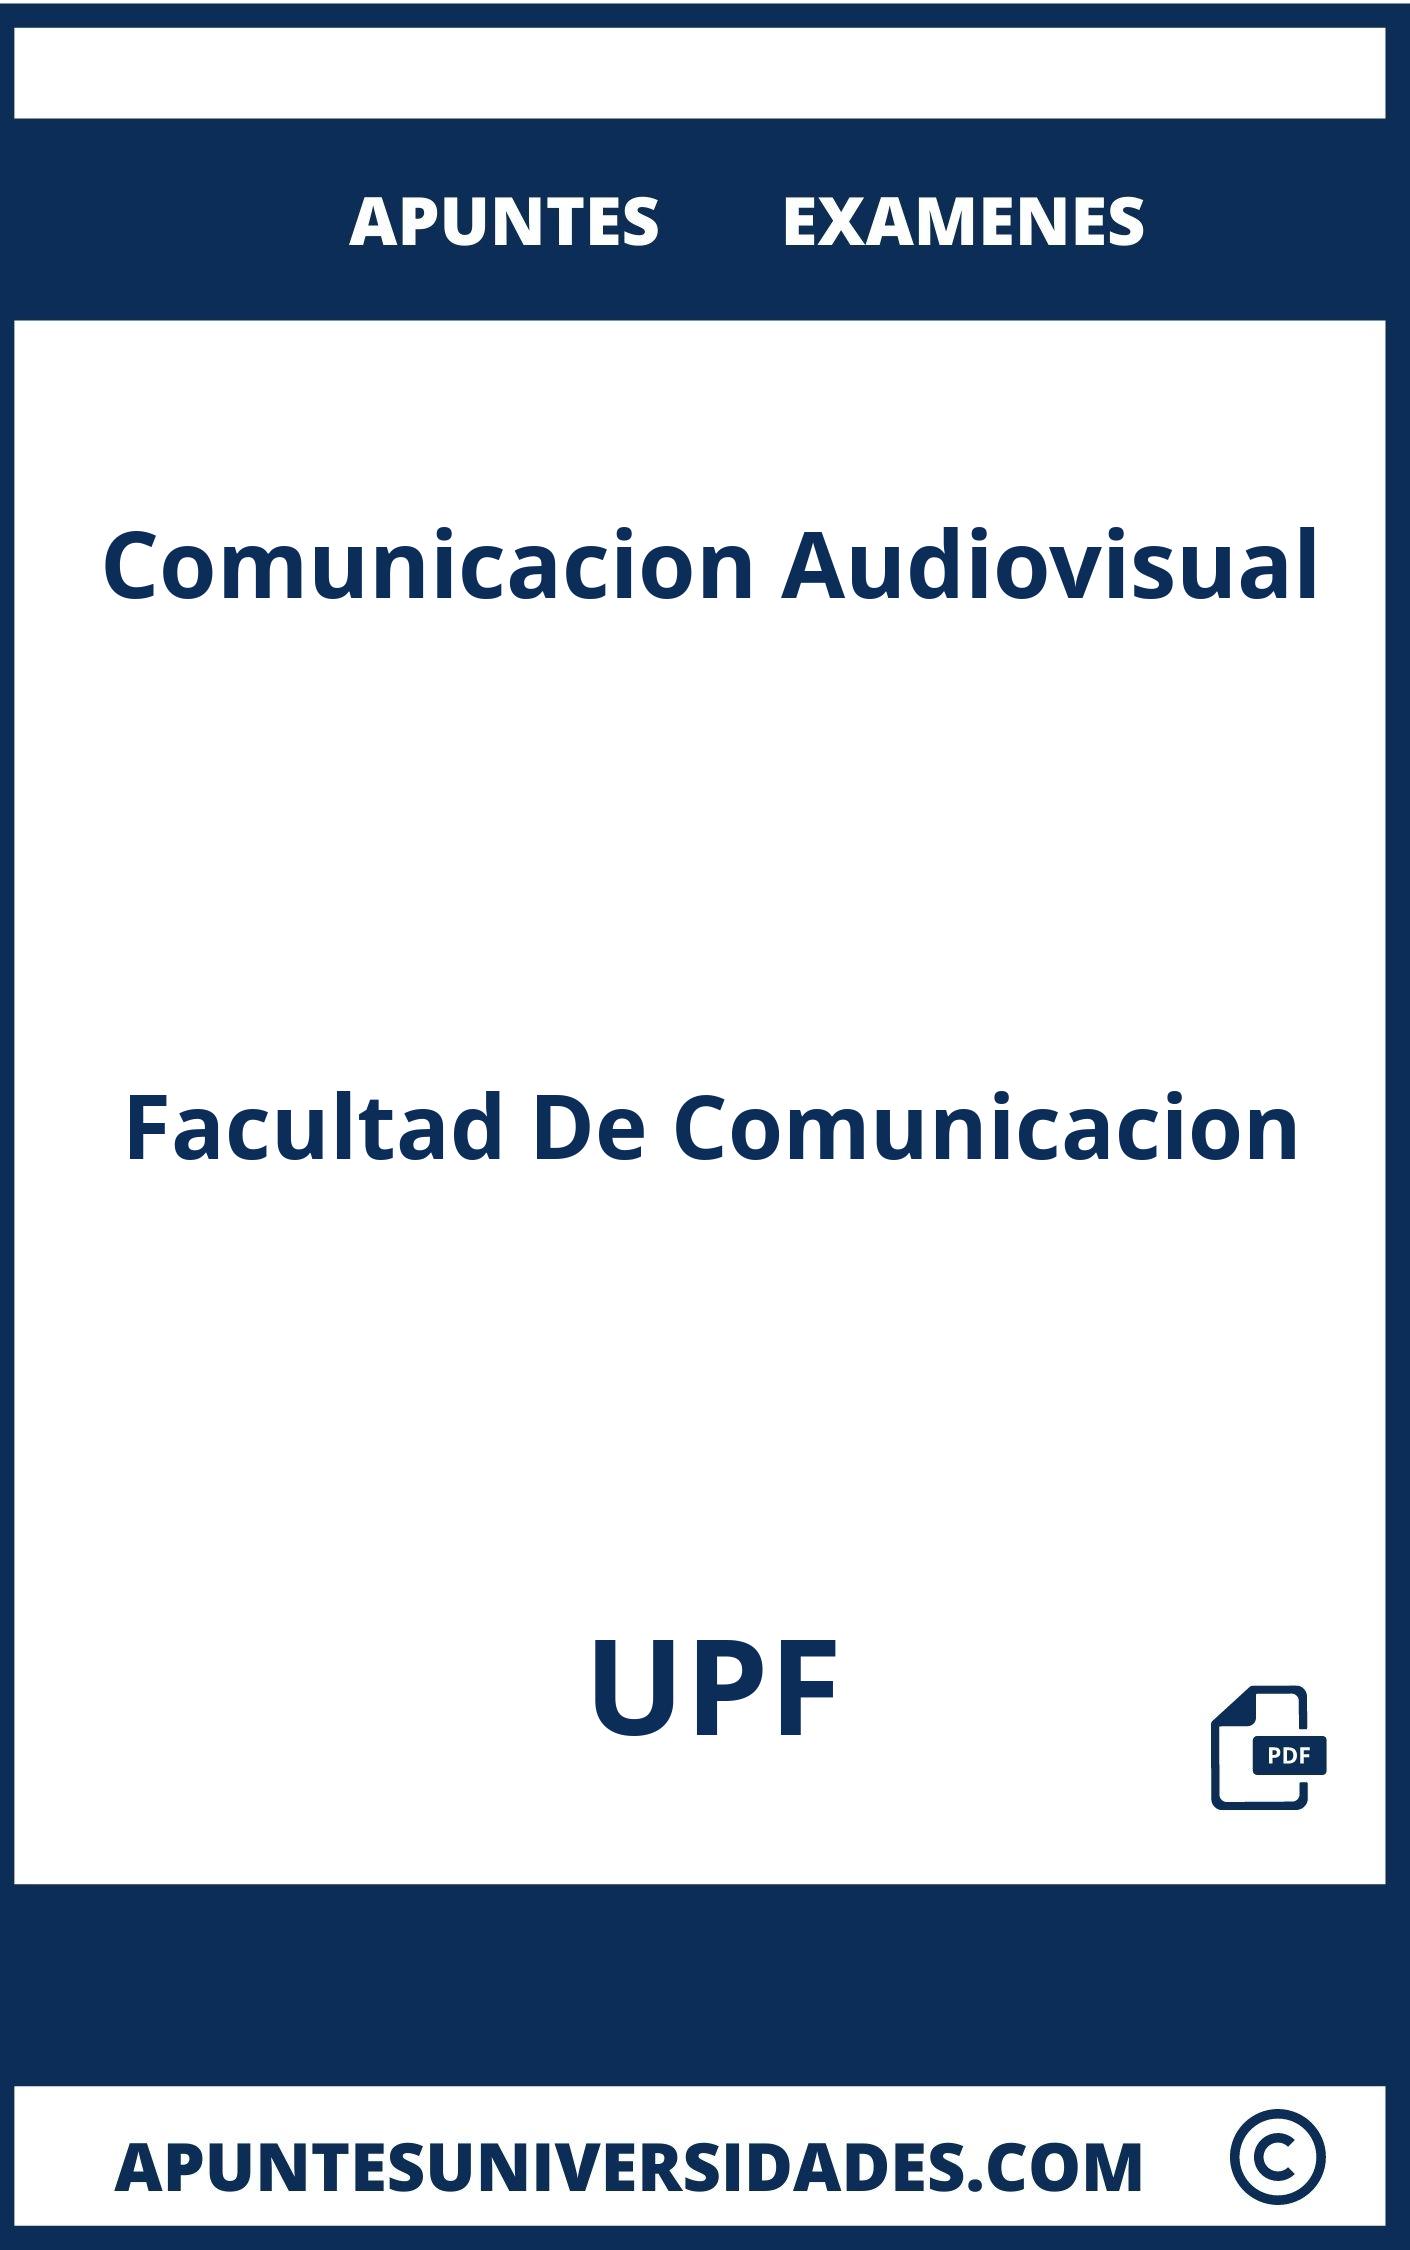 Apuntes y Examenes Comunicacion Audiovisual UPF